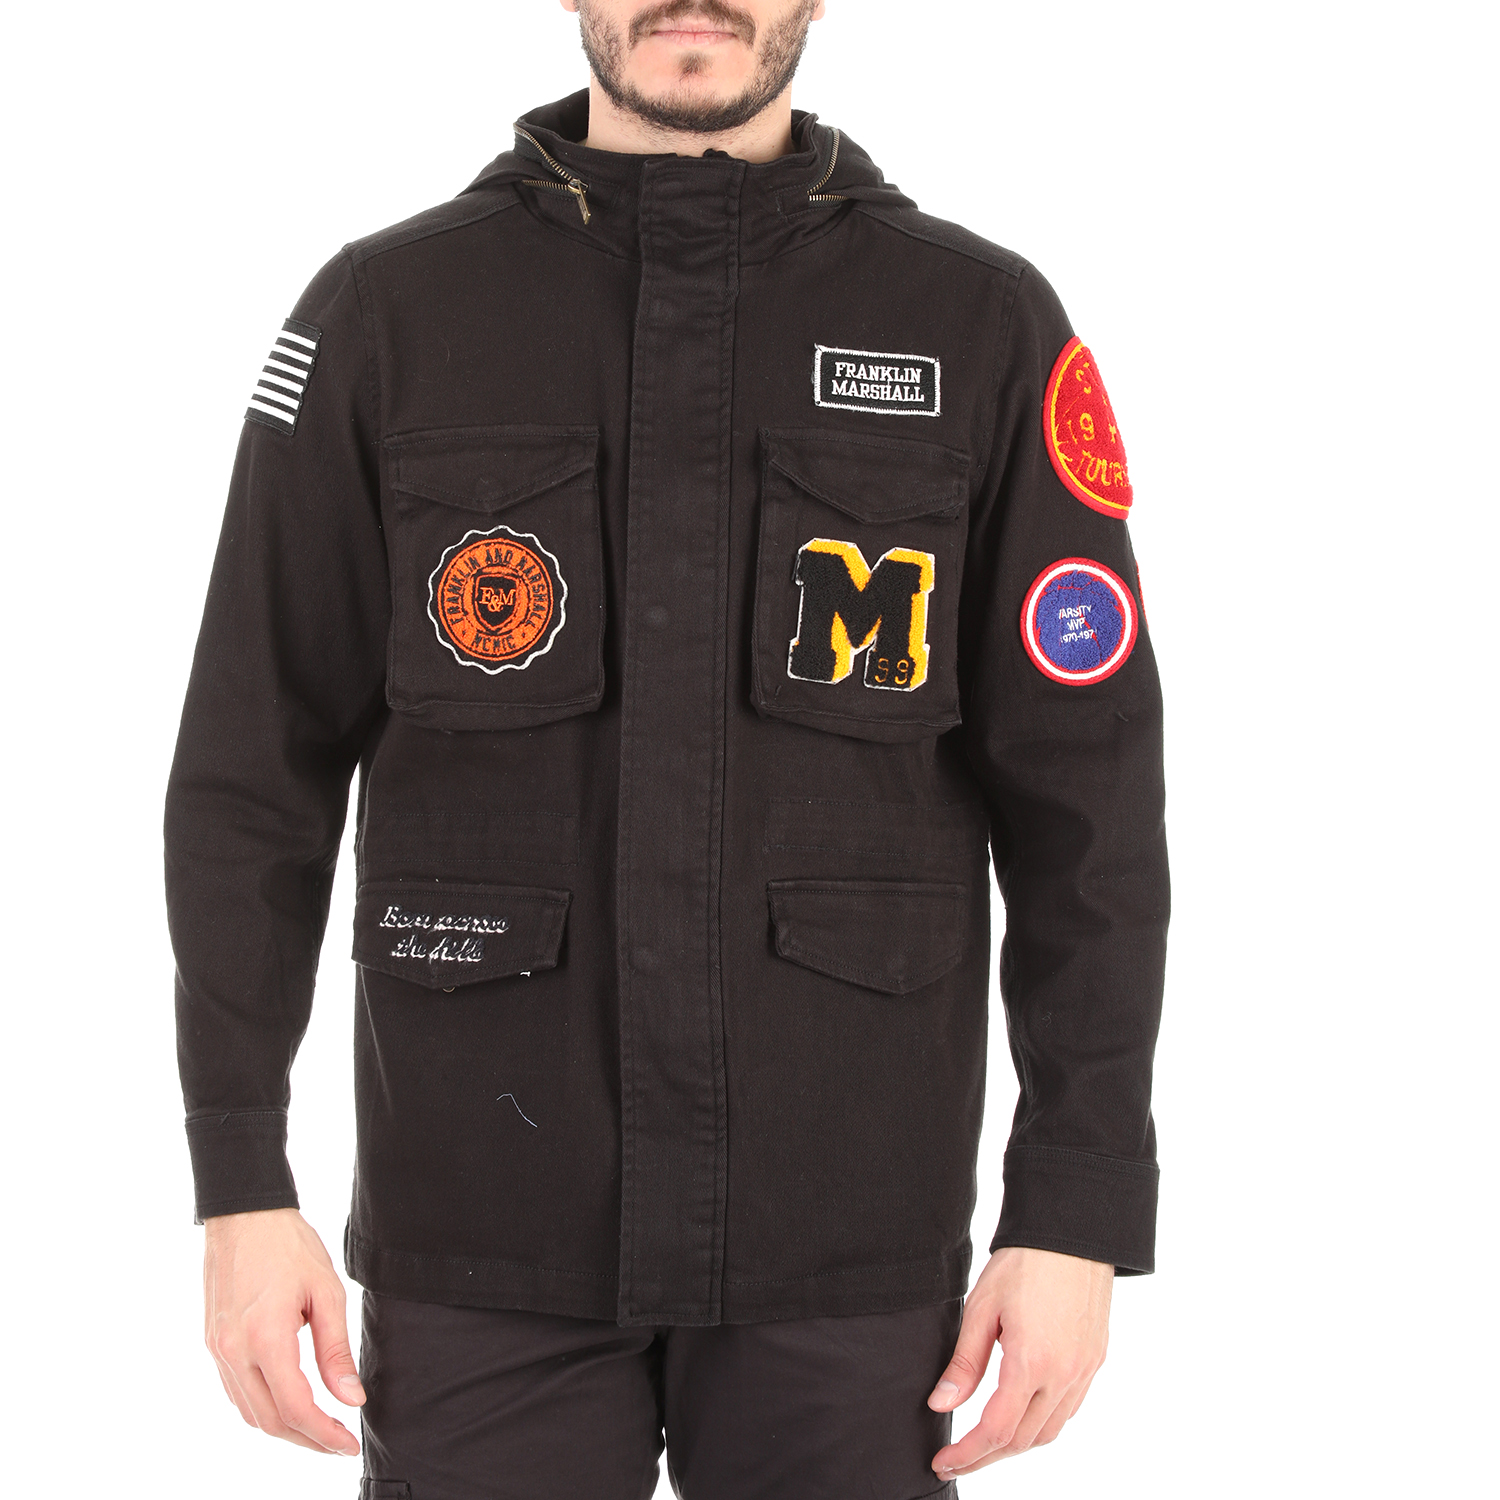 FRANKLIN & MARSHALL - Ανδρικό jacket FRANKLIN & MARSHALL μαύρο Ανδρικά/Ρούχα/Πανωφόρια/Τζάκετς